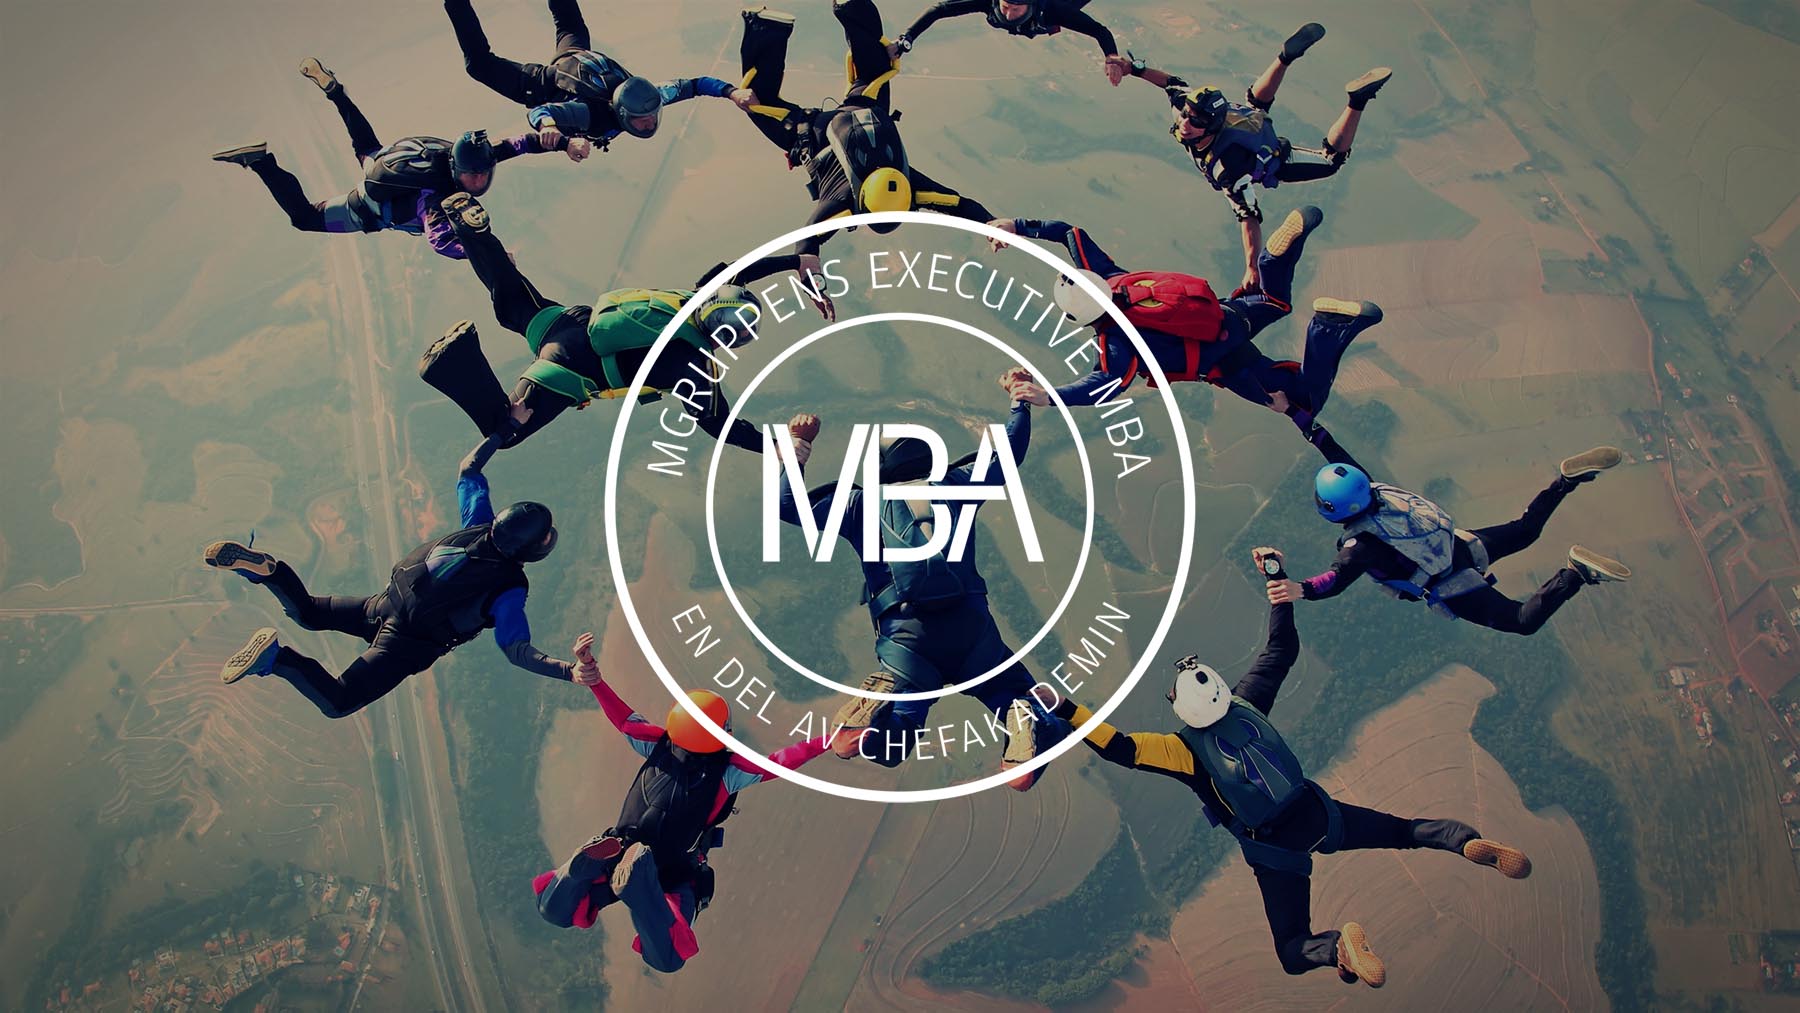 Mgruppens Executive MBA för hela ledningsgruppen